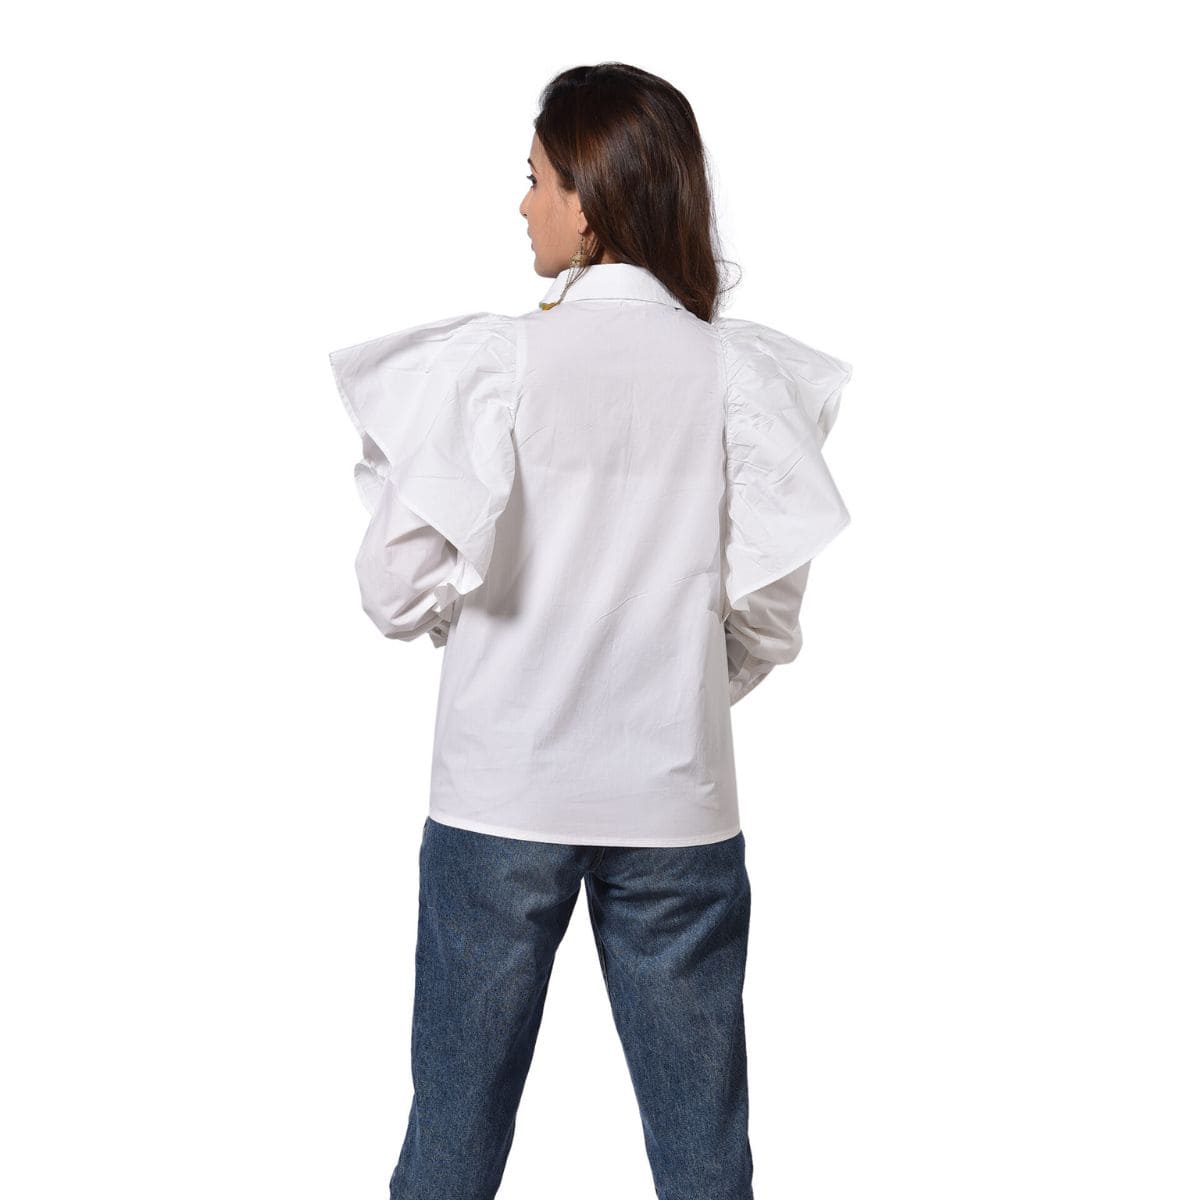 Shirt with Dramatic frill on sleeves - CHIKARI